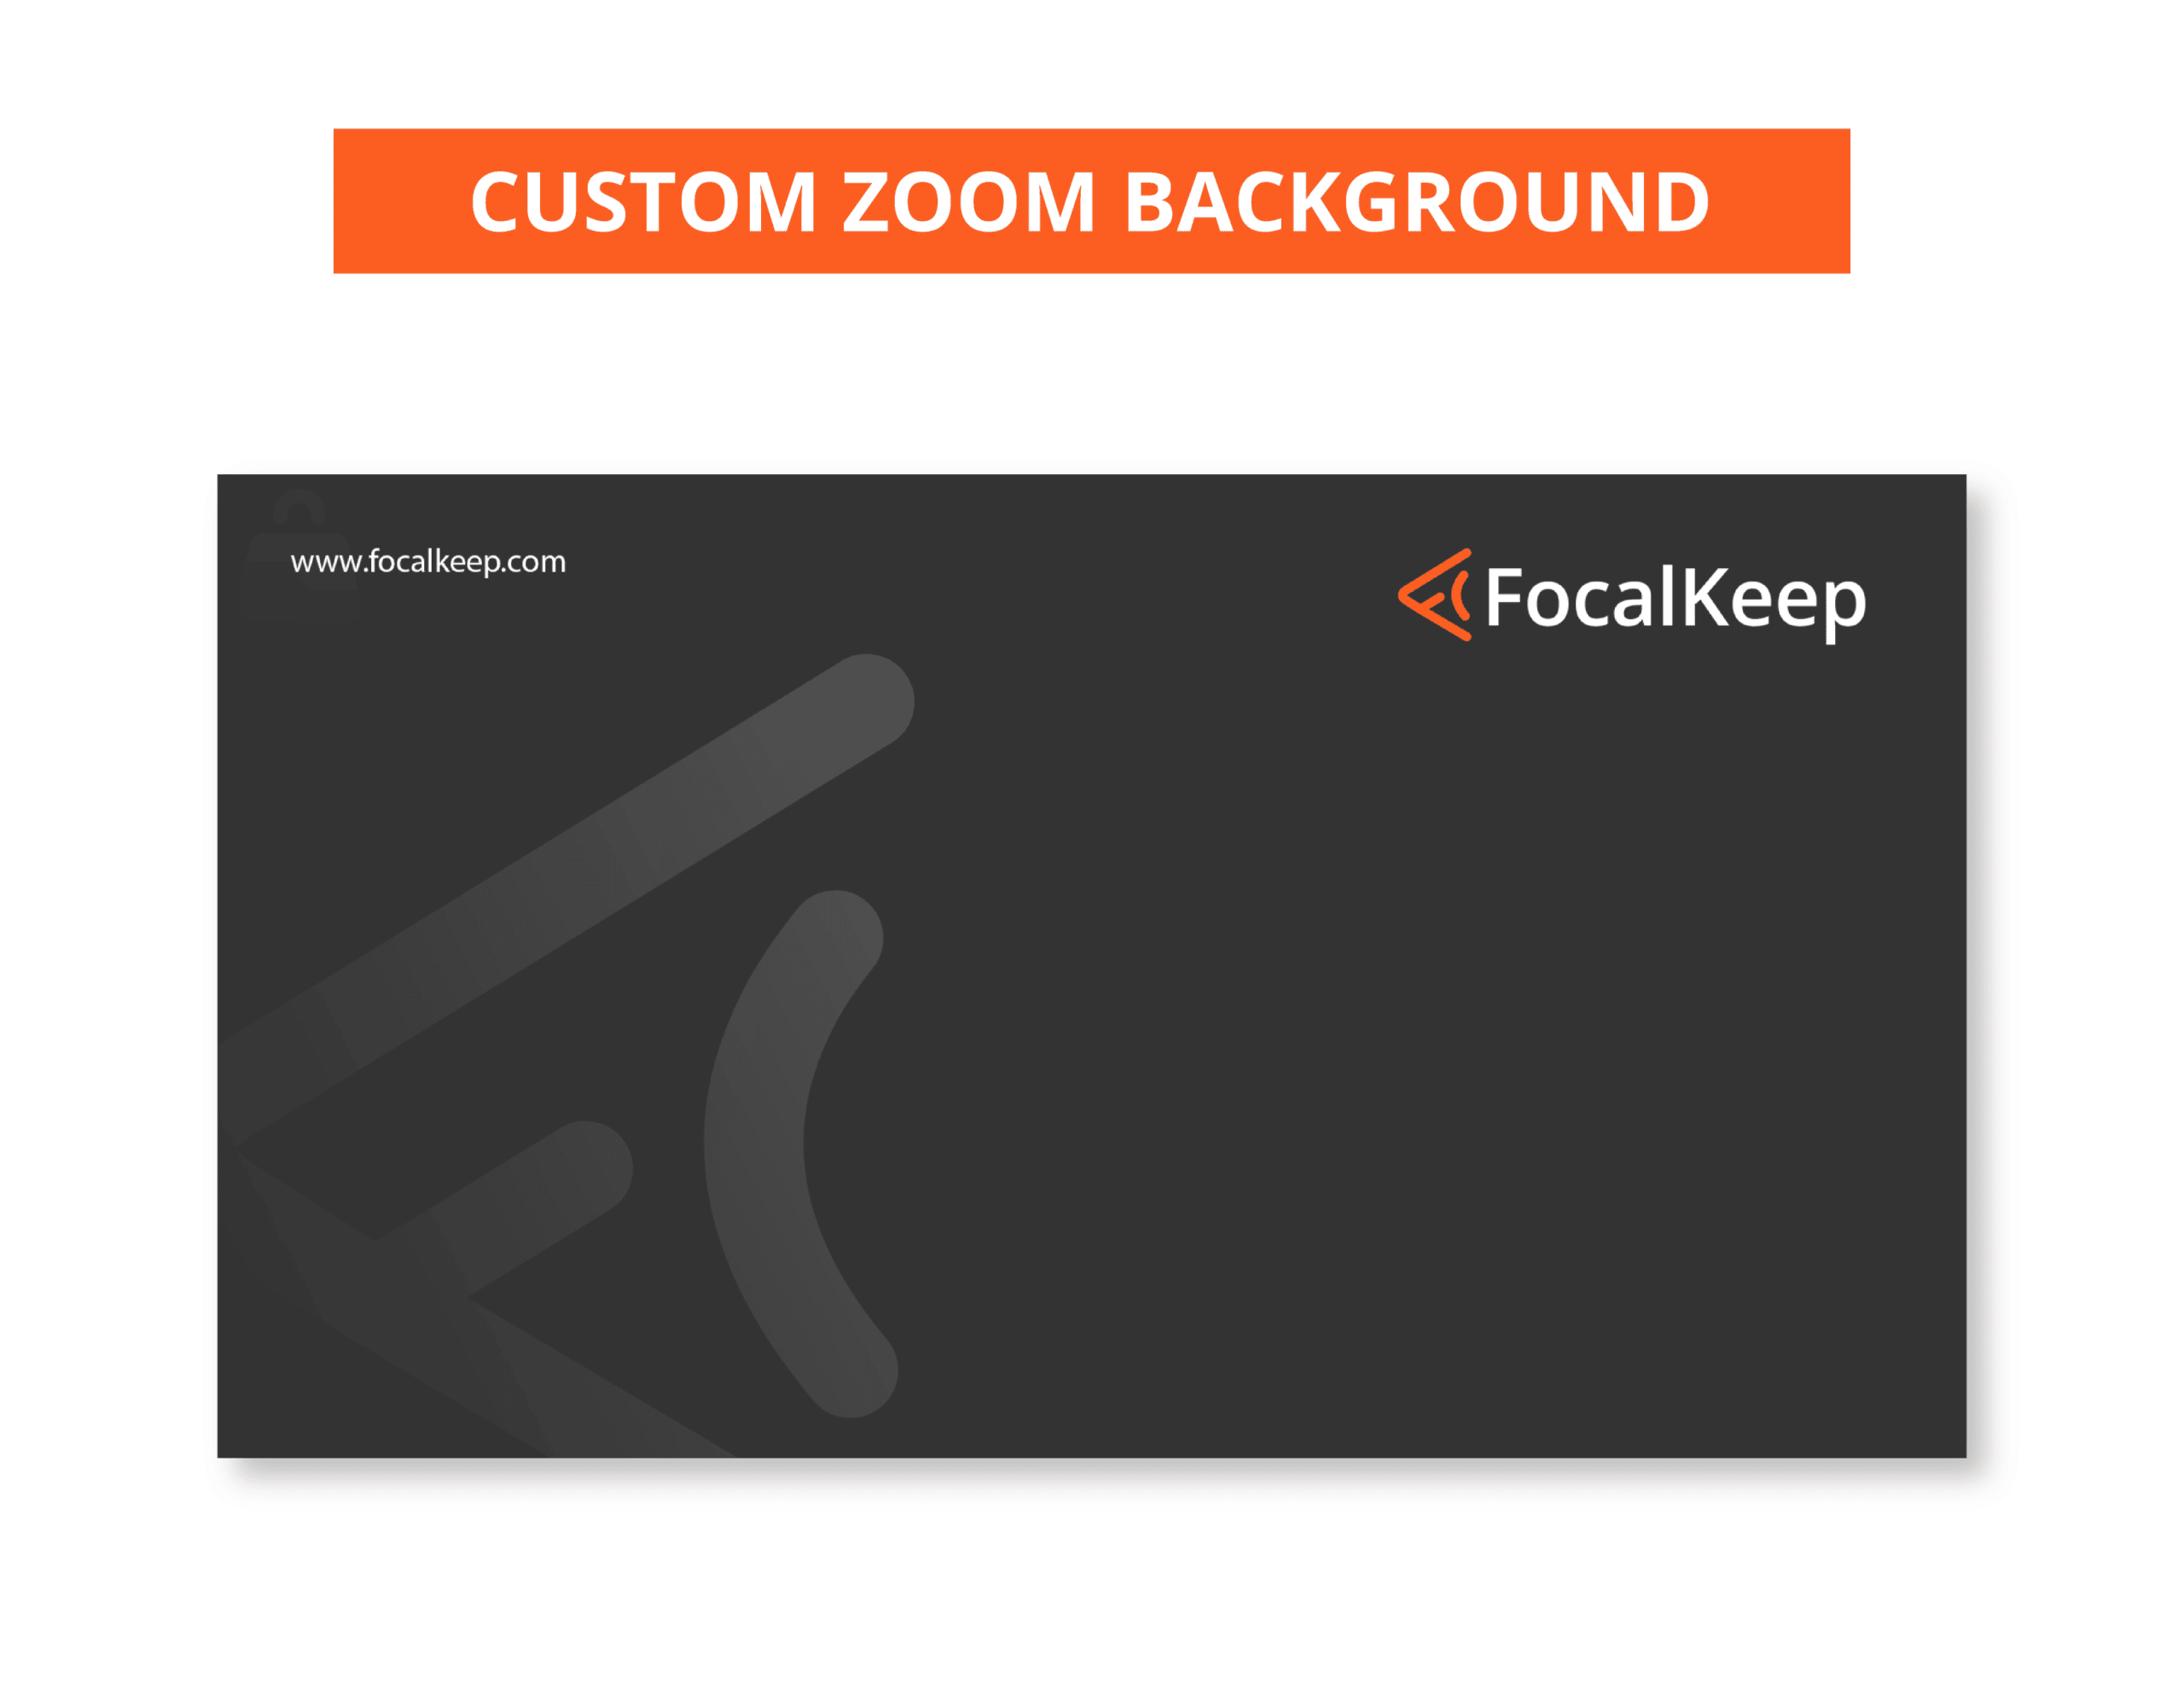 07Focal_Keep__Custom Zoom Background